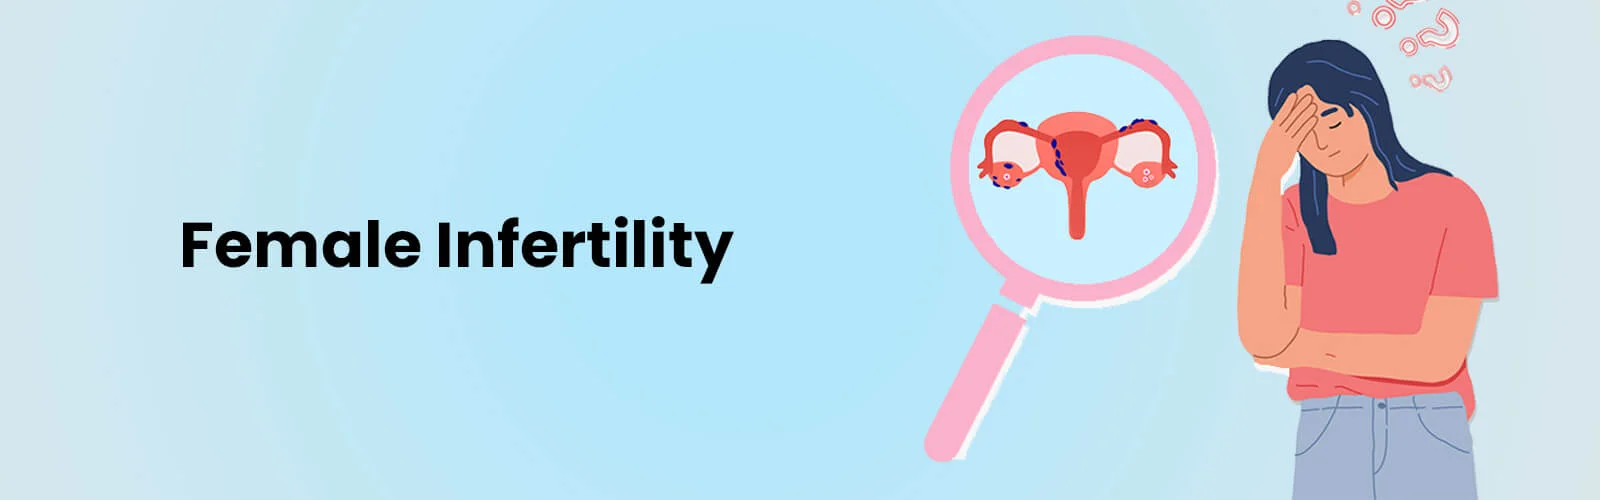 female-infertility-banner